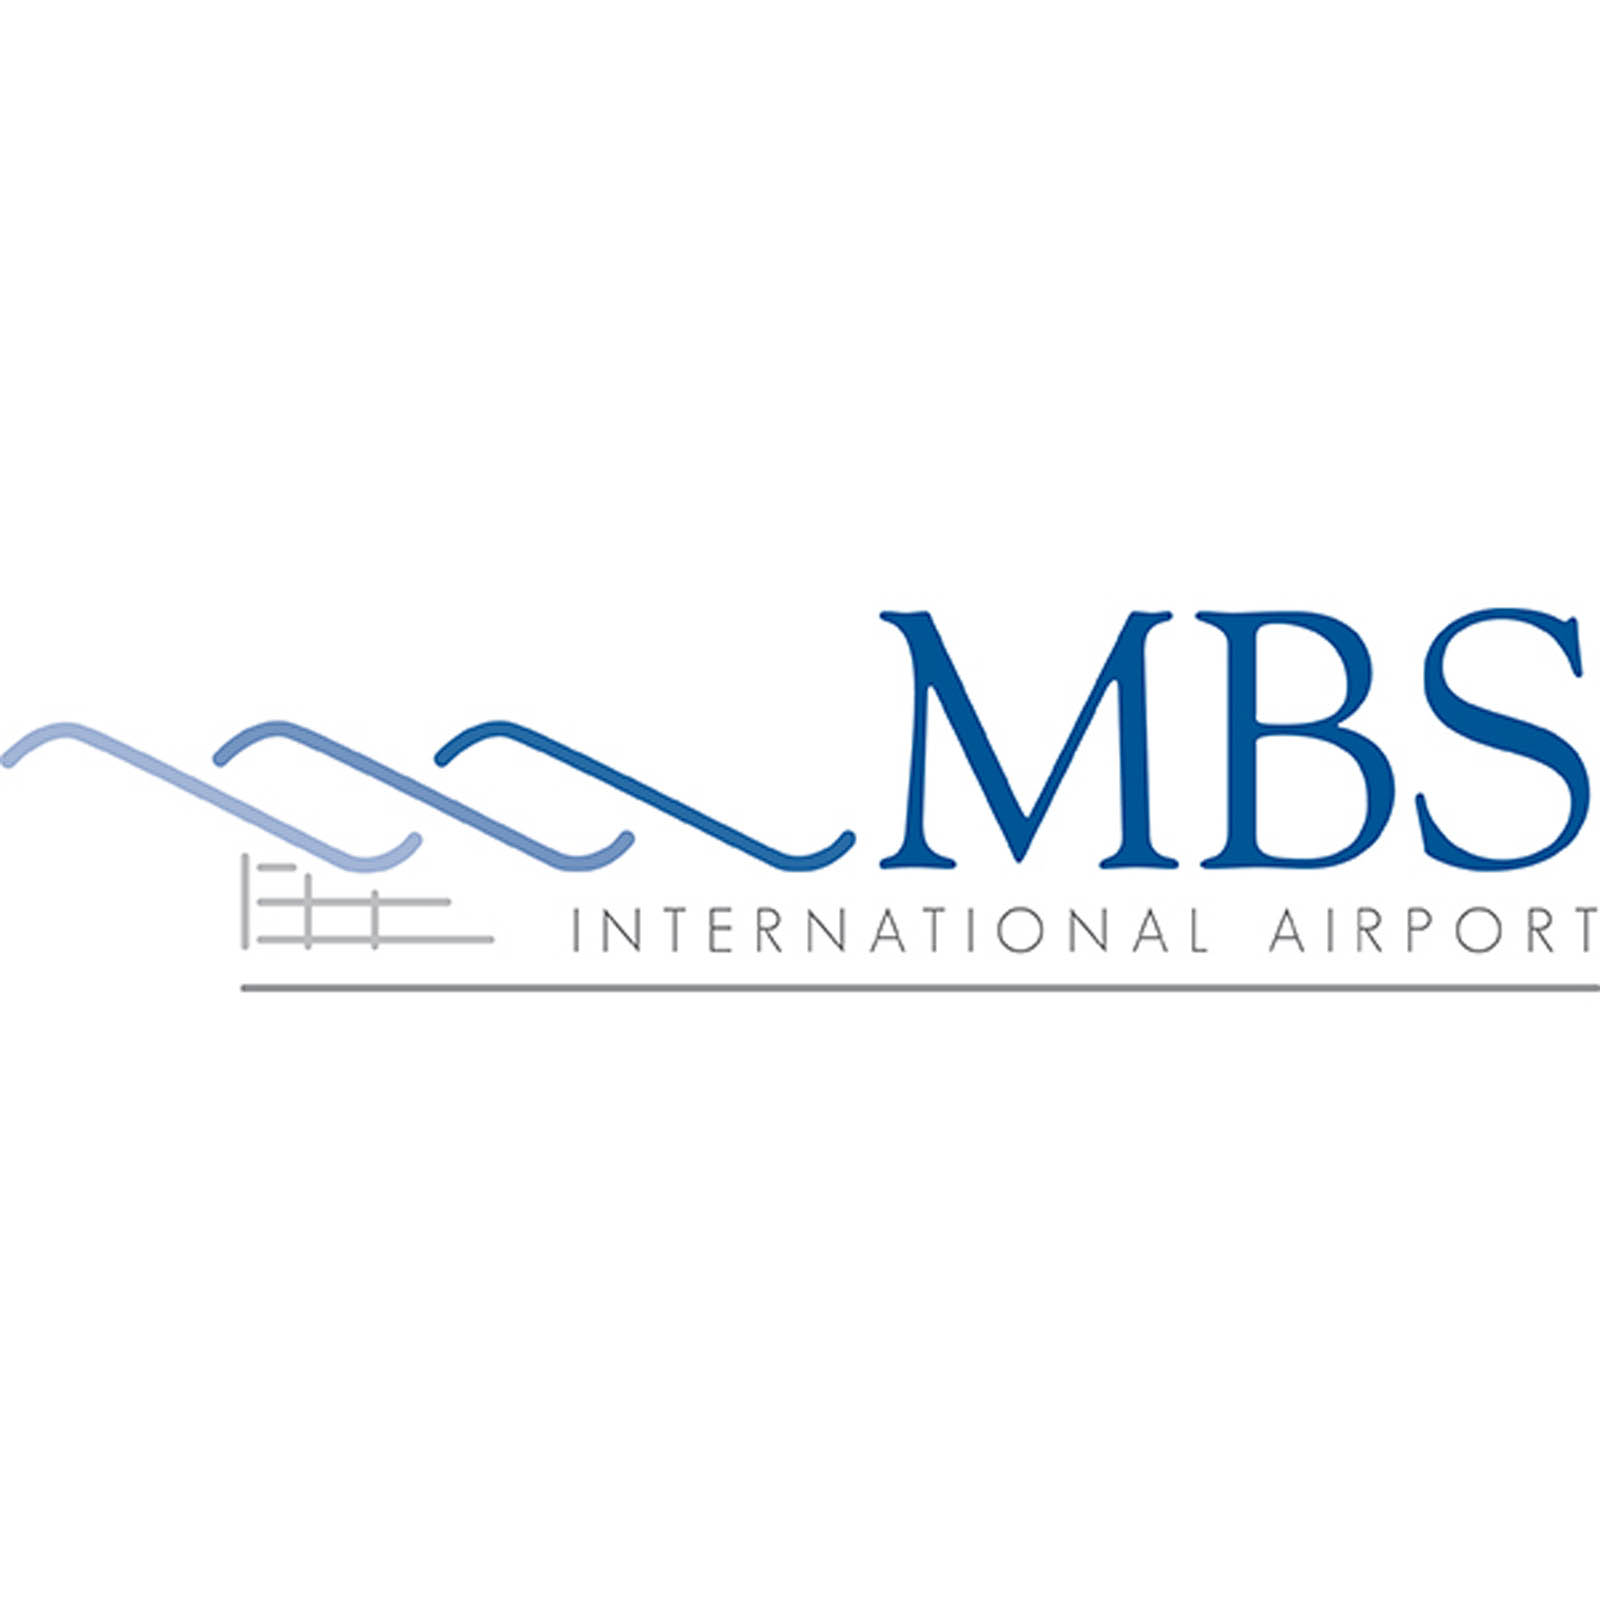 MBS International Airport